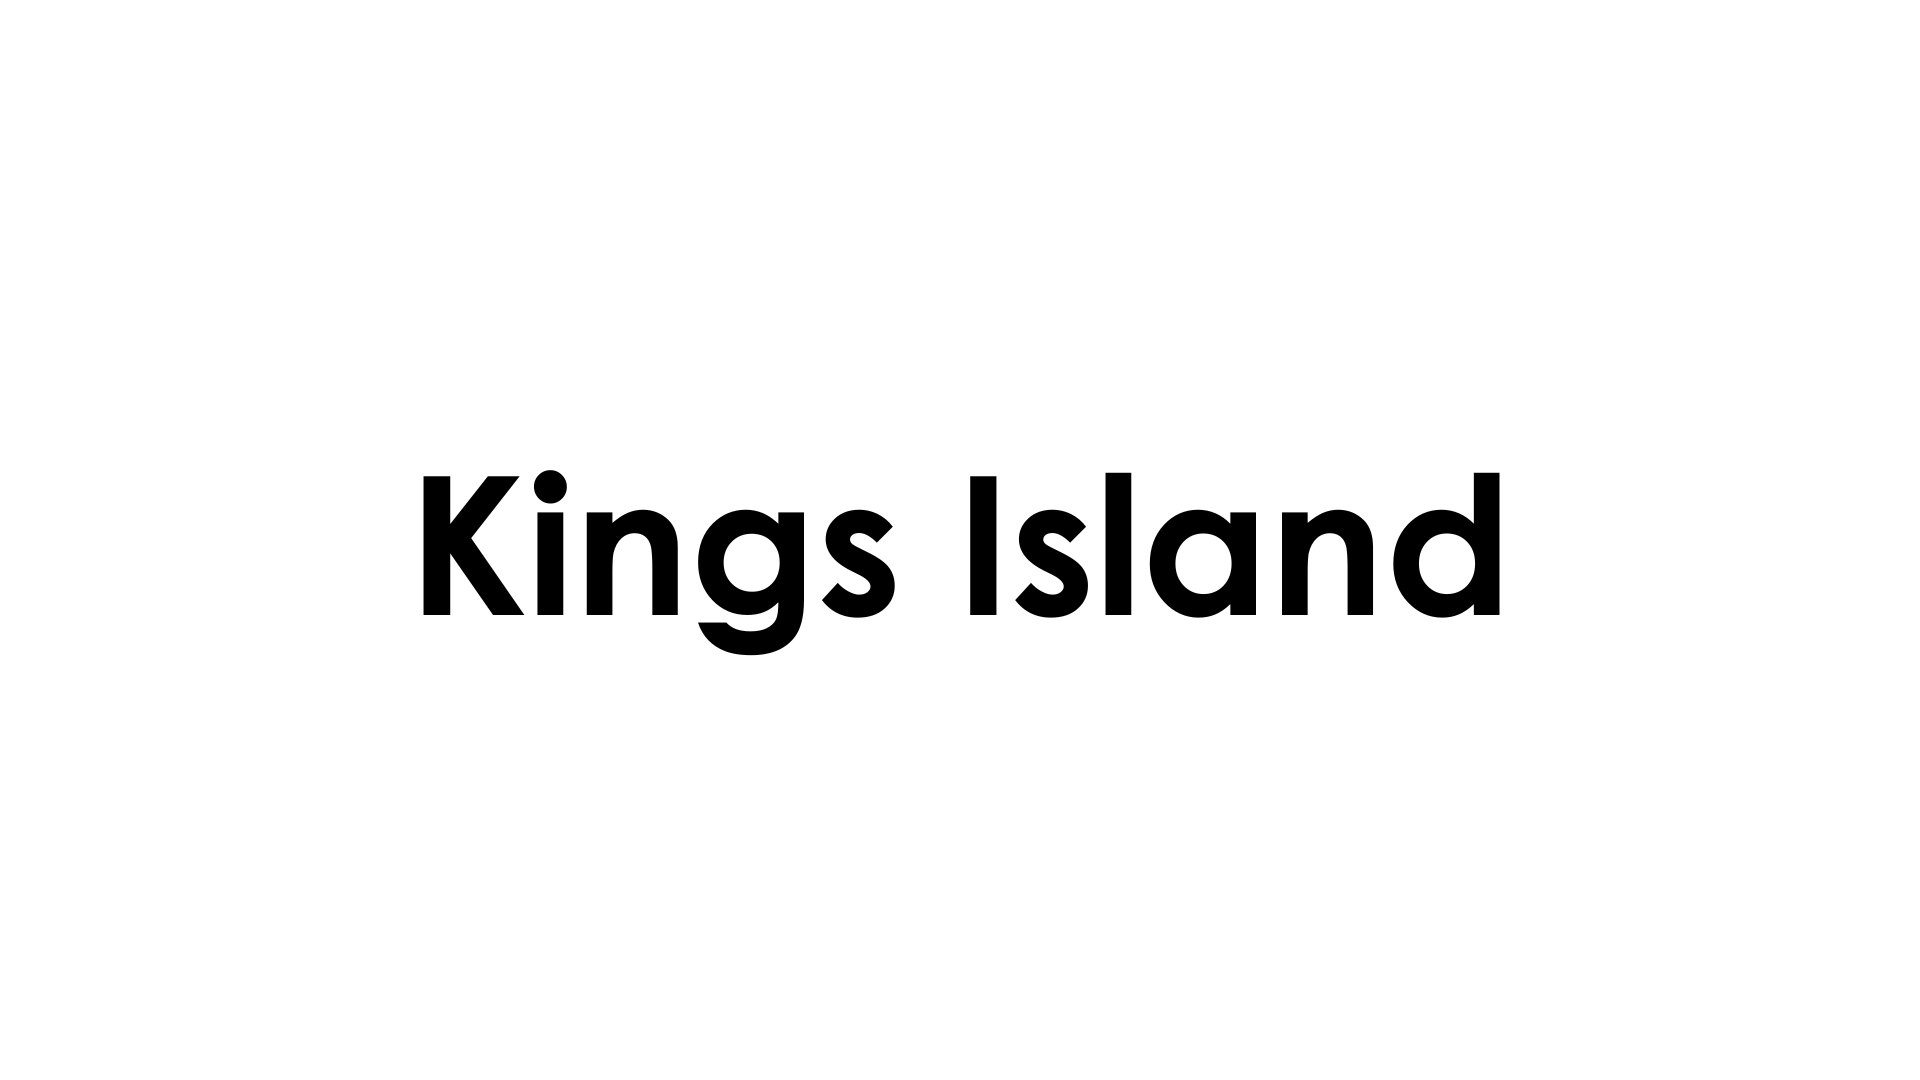 Kings Island Logo